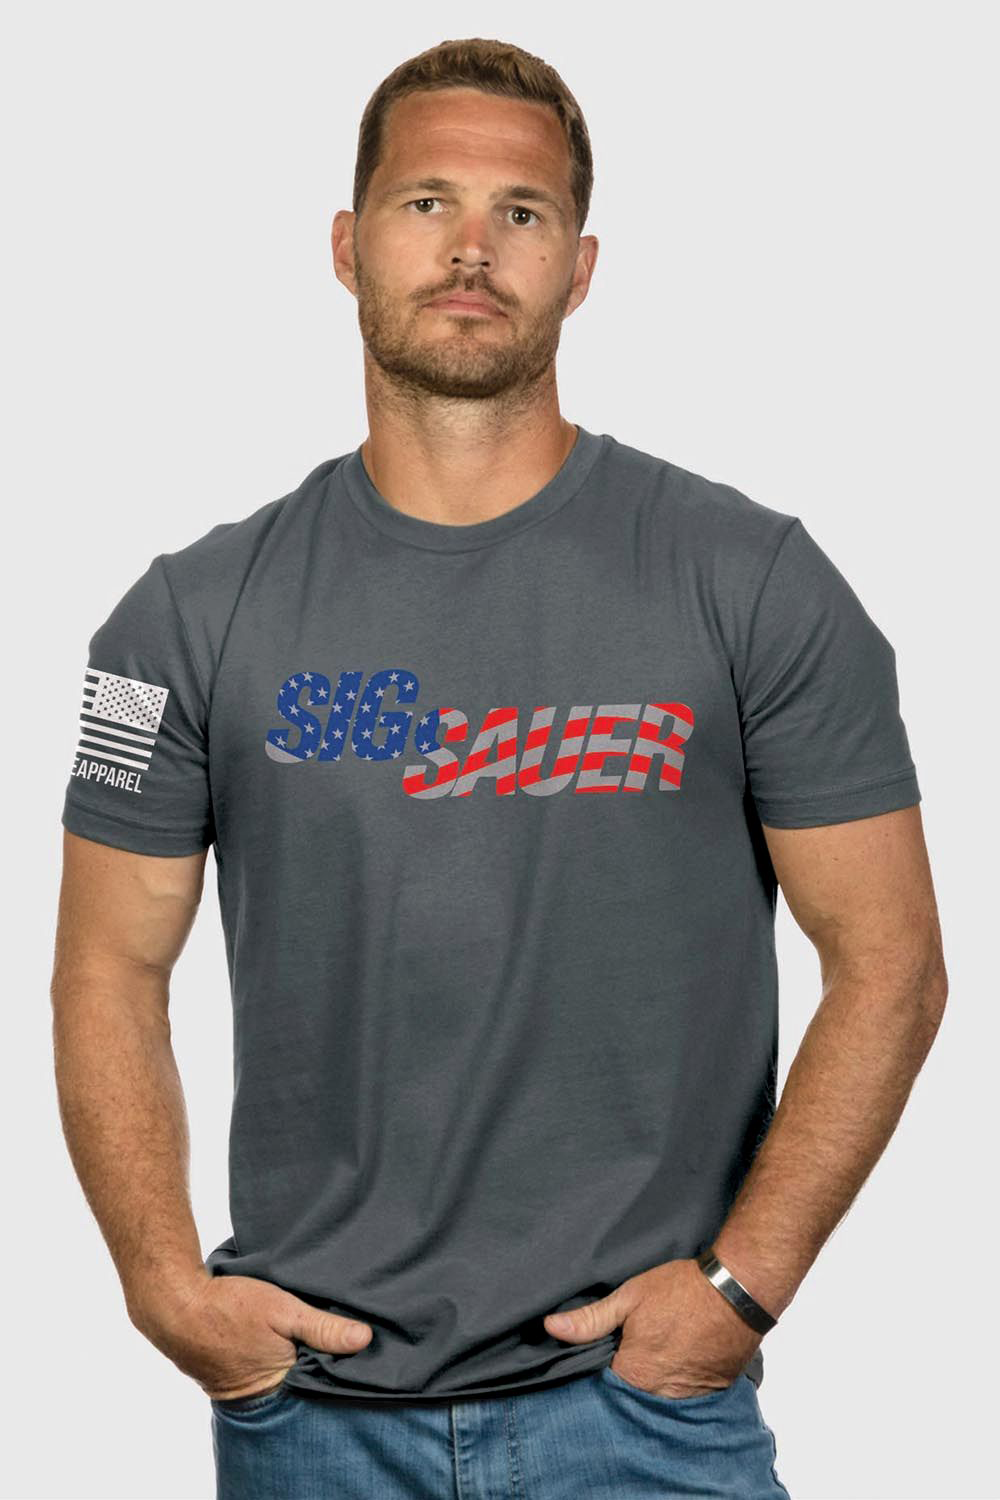 Nine Line Apparel Sig Sauer Short-Sleeve T-Shirt for Men | Bass Pro Shops